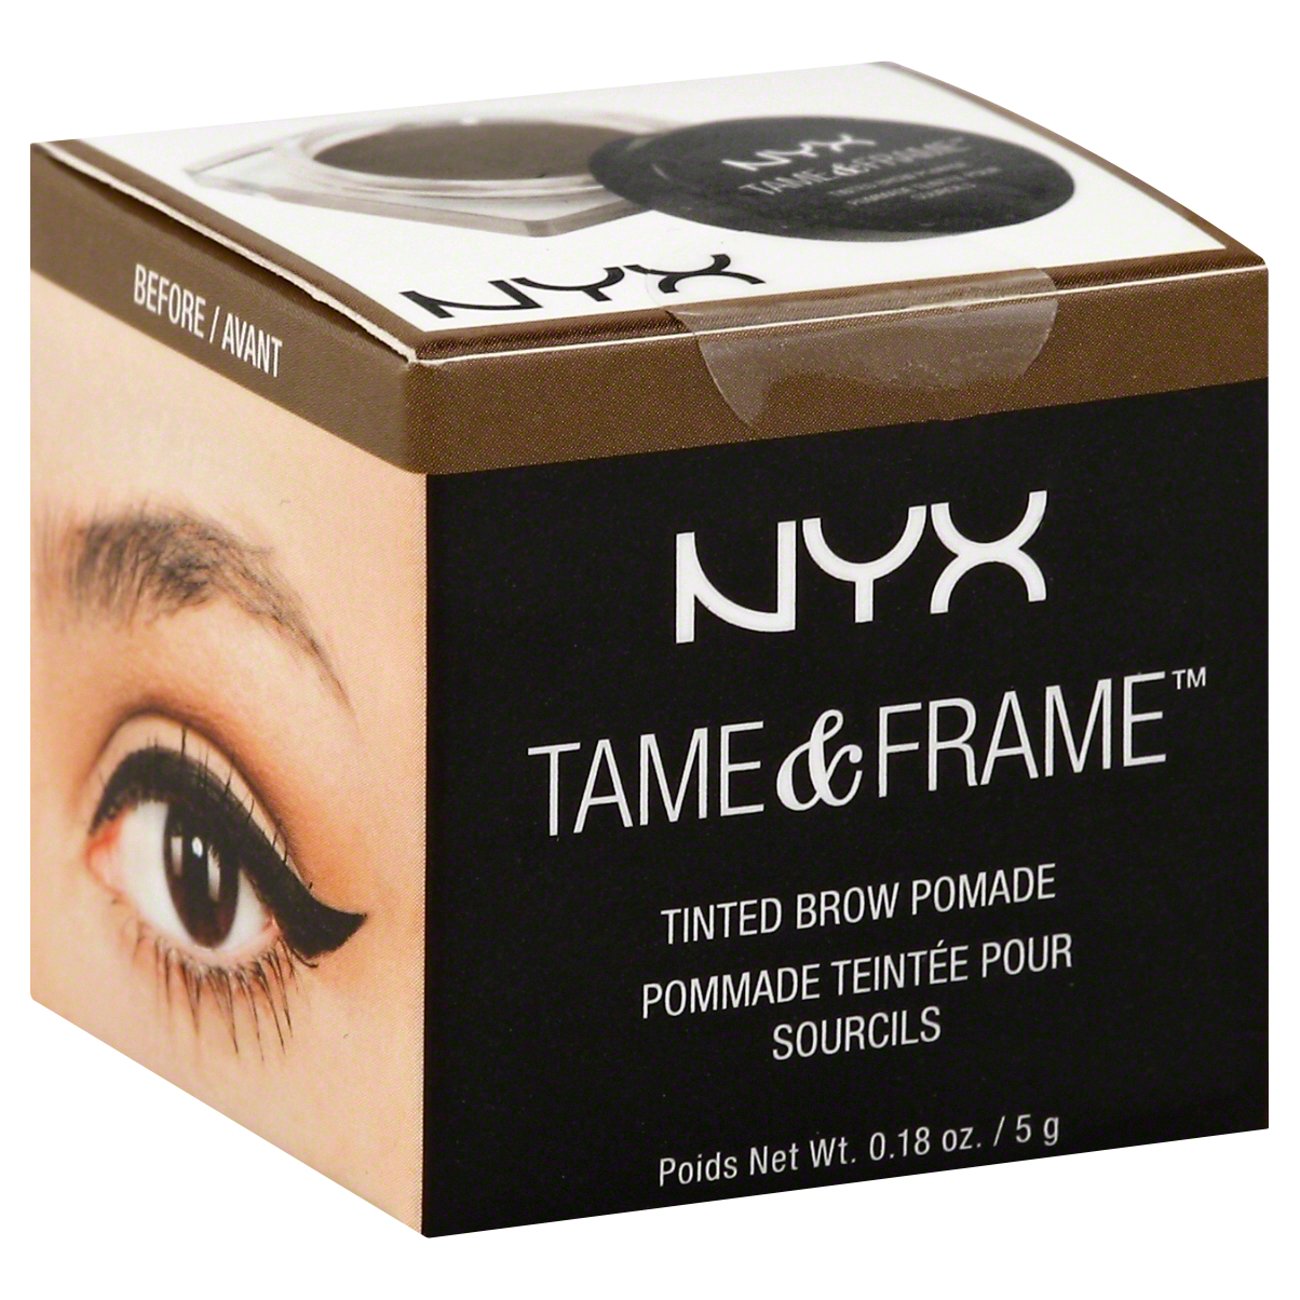 NYX Tame & Frame at H-E-B Shop Tinted - Brow Brow Brunette Powder Pencils Pomade, 